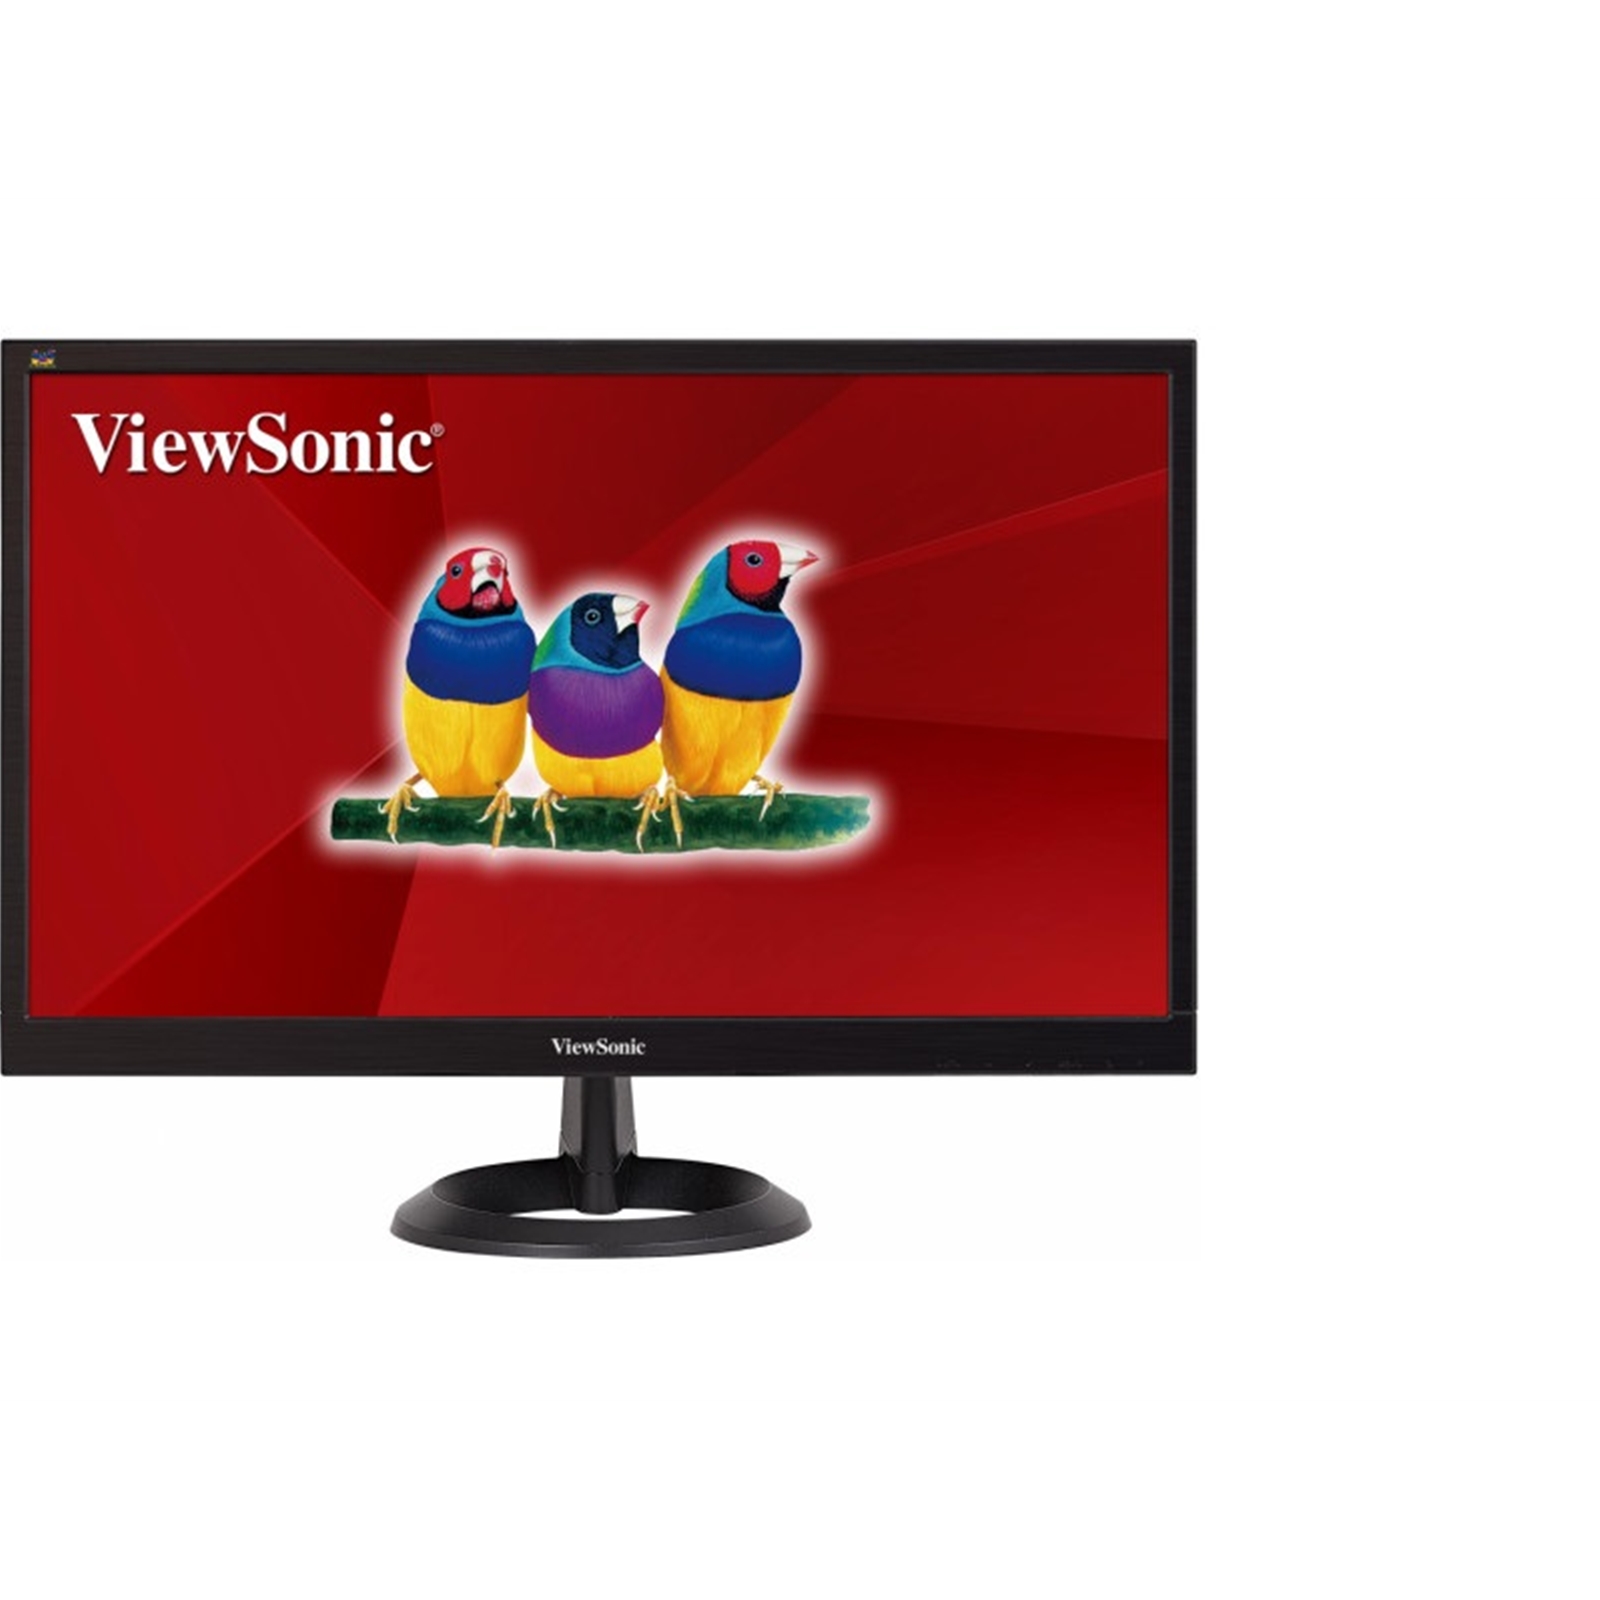 Viewsonic VA2261-2 22'' Full HD Monitor, LED, Widescreen, VGA, DVI, 5ms, Tilt, VESA